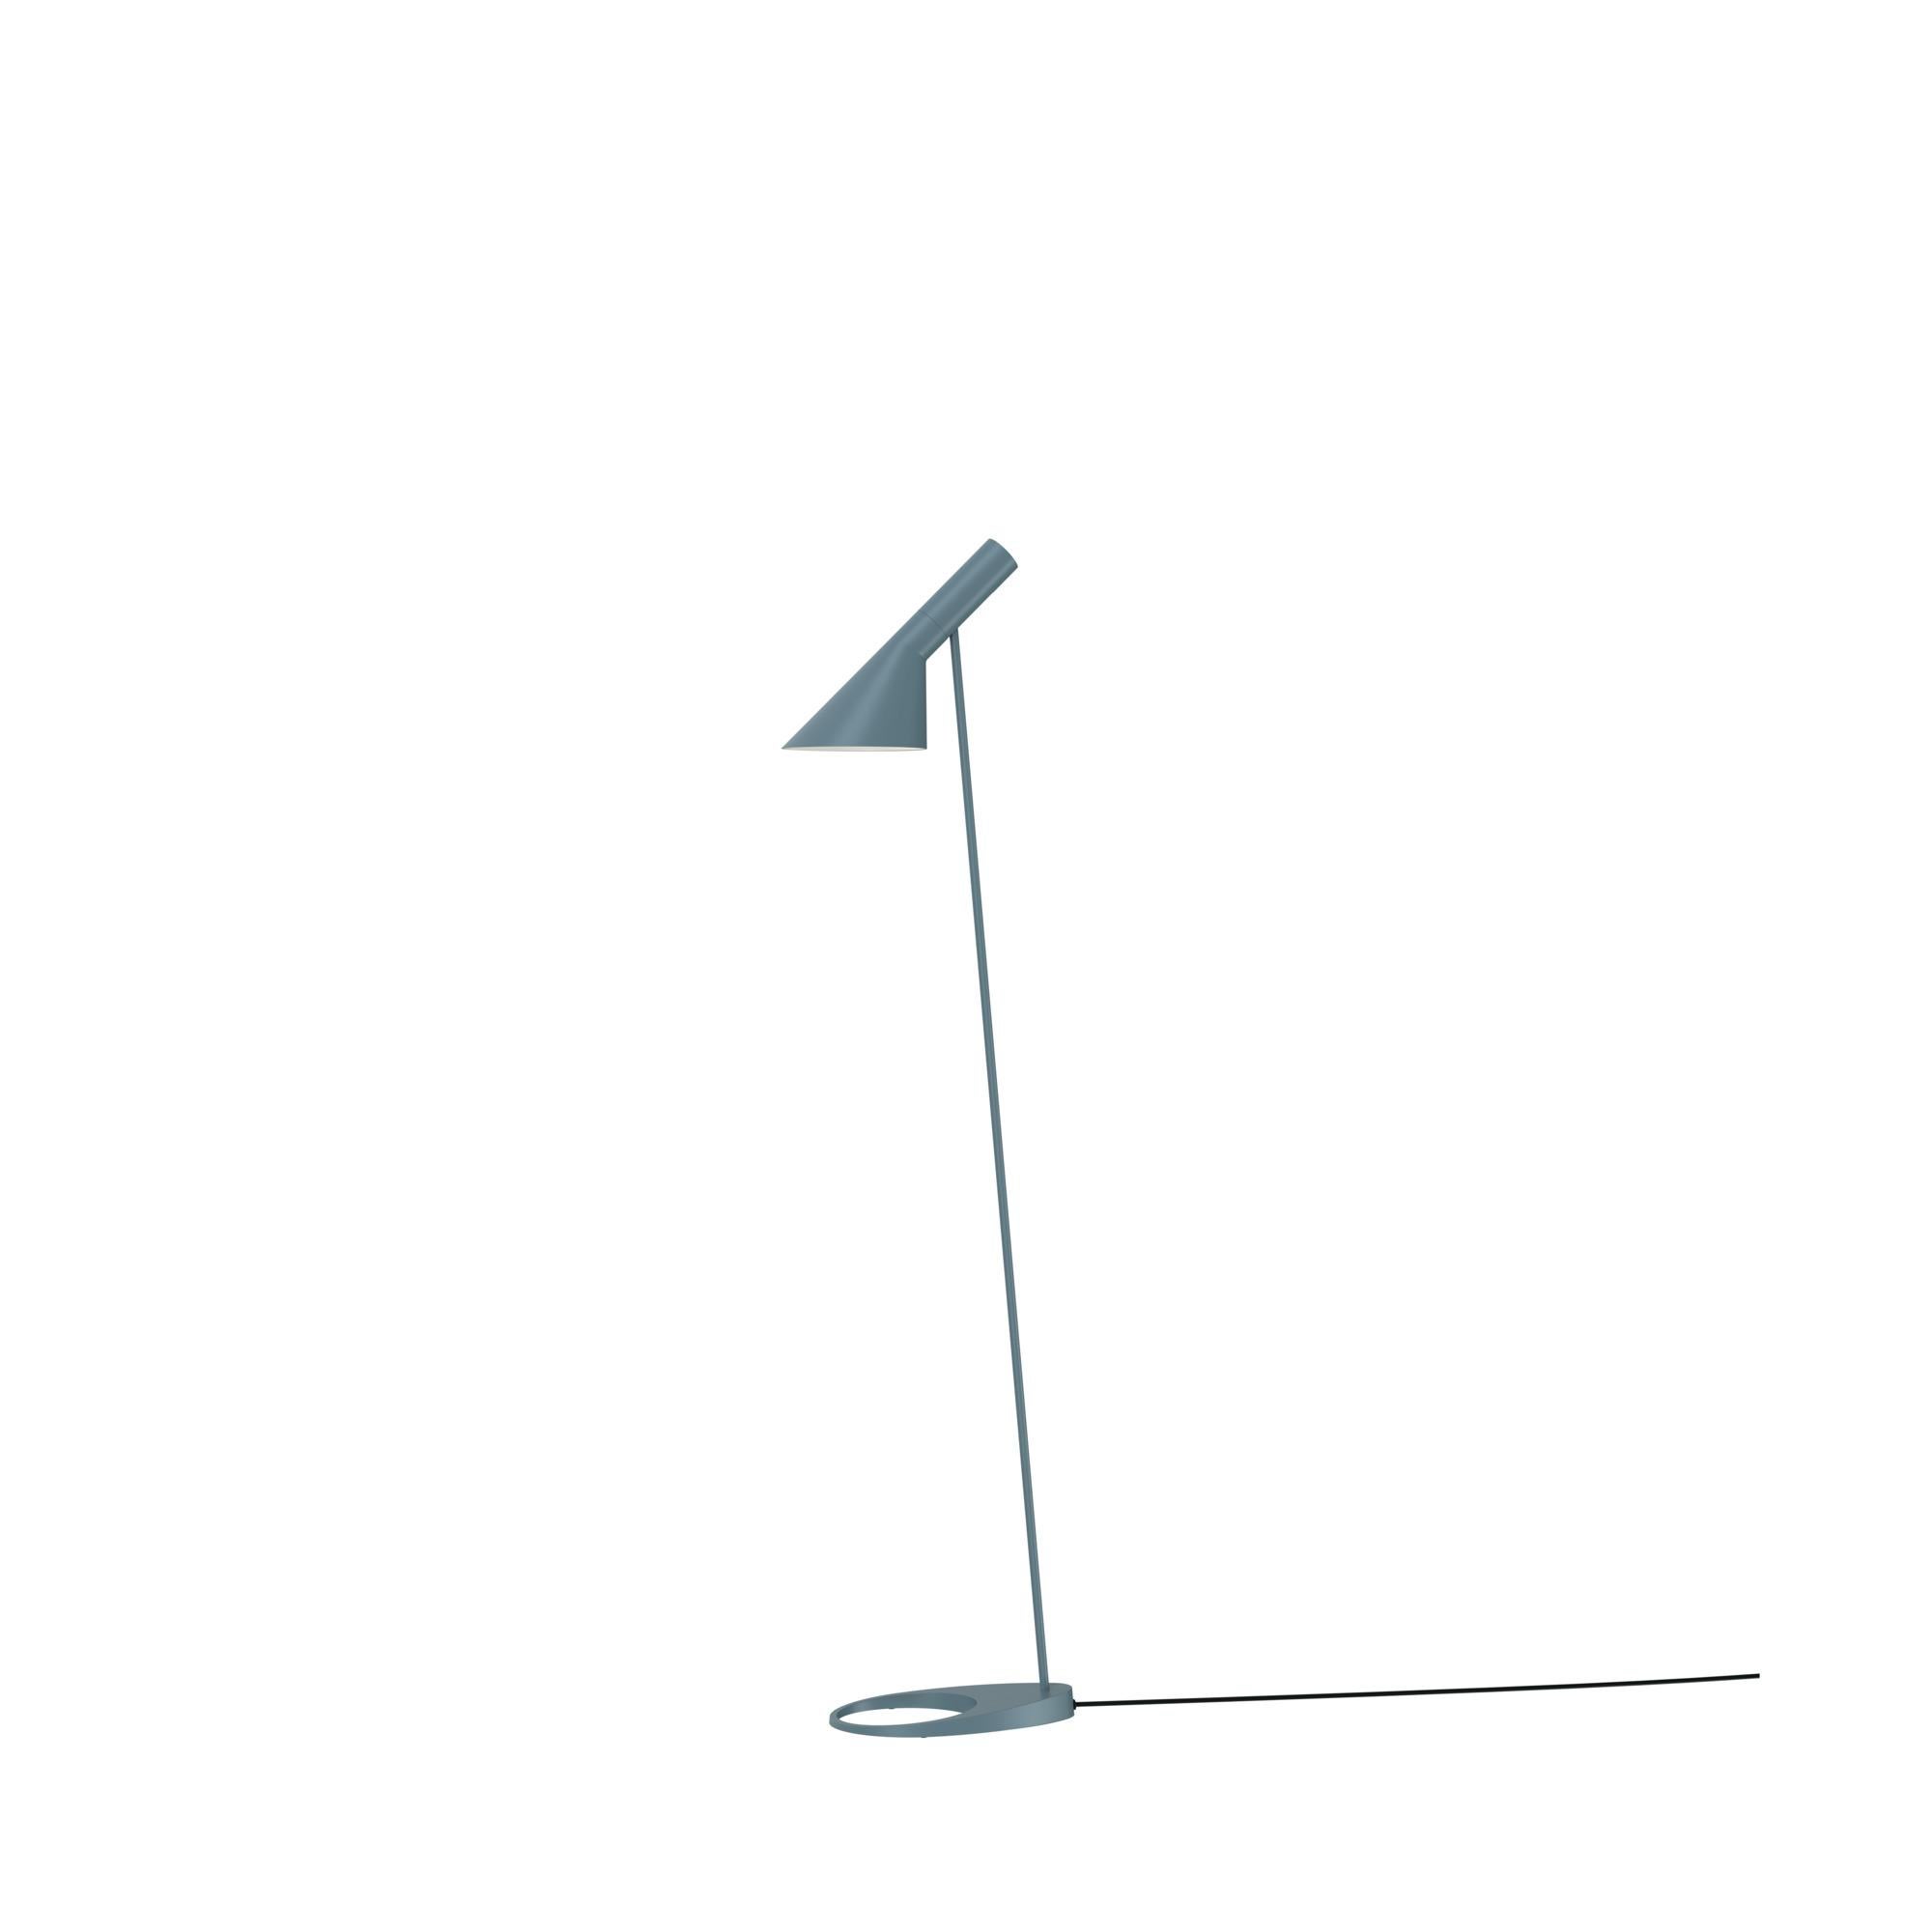 Arne Jacobsen AJ Floor Lamp in Warm Sand for Louis Poulsen For Sale 7